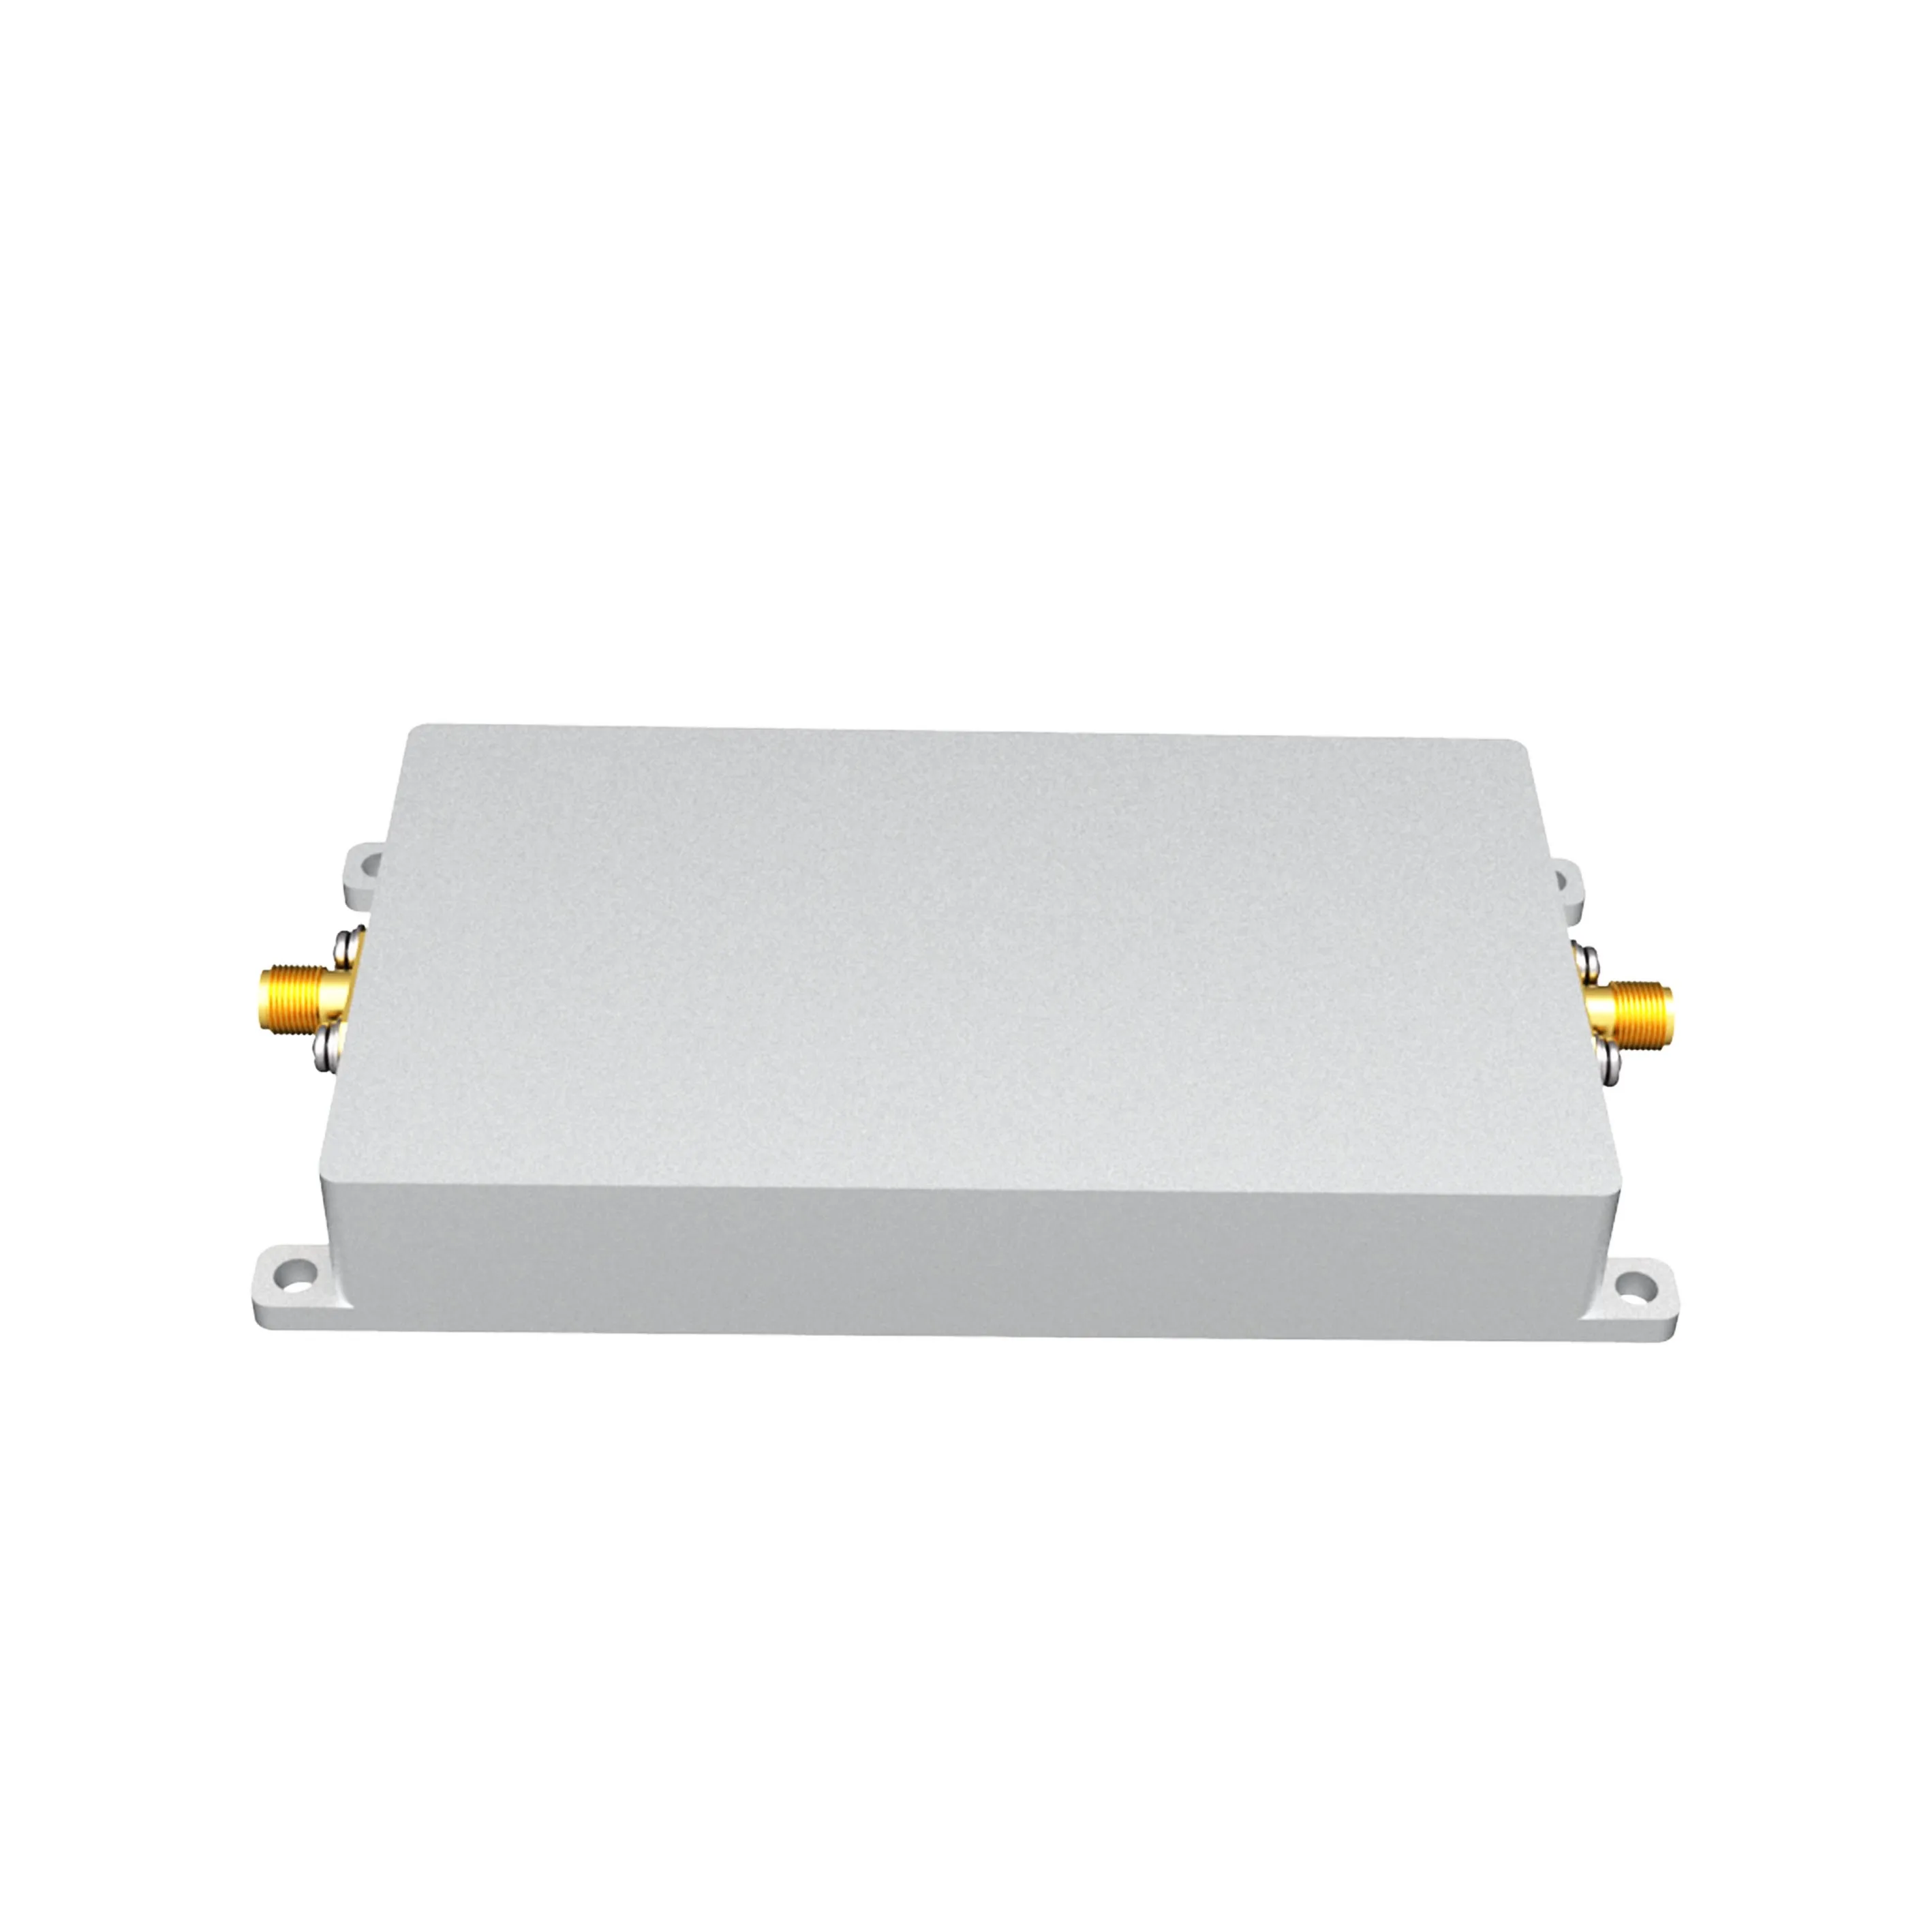 SZHUASHI-Bidirectional Signal Amplifier For 915MHz Wlan Access Point、Client, 0.9GHz, 43dBm (20W) Signal Booster 100% New，UAV